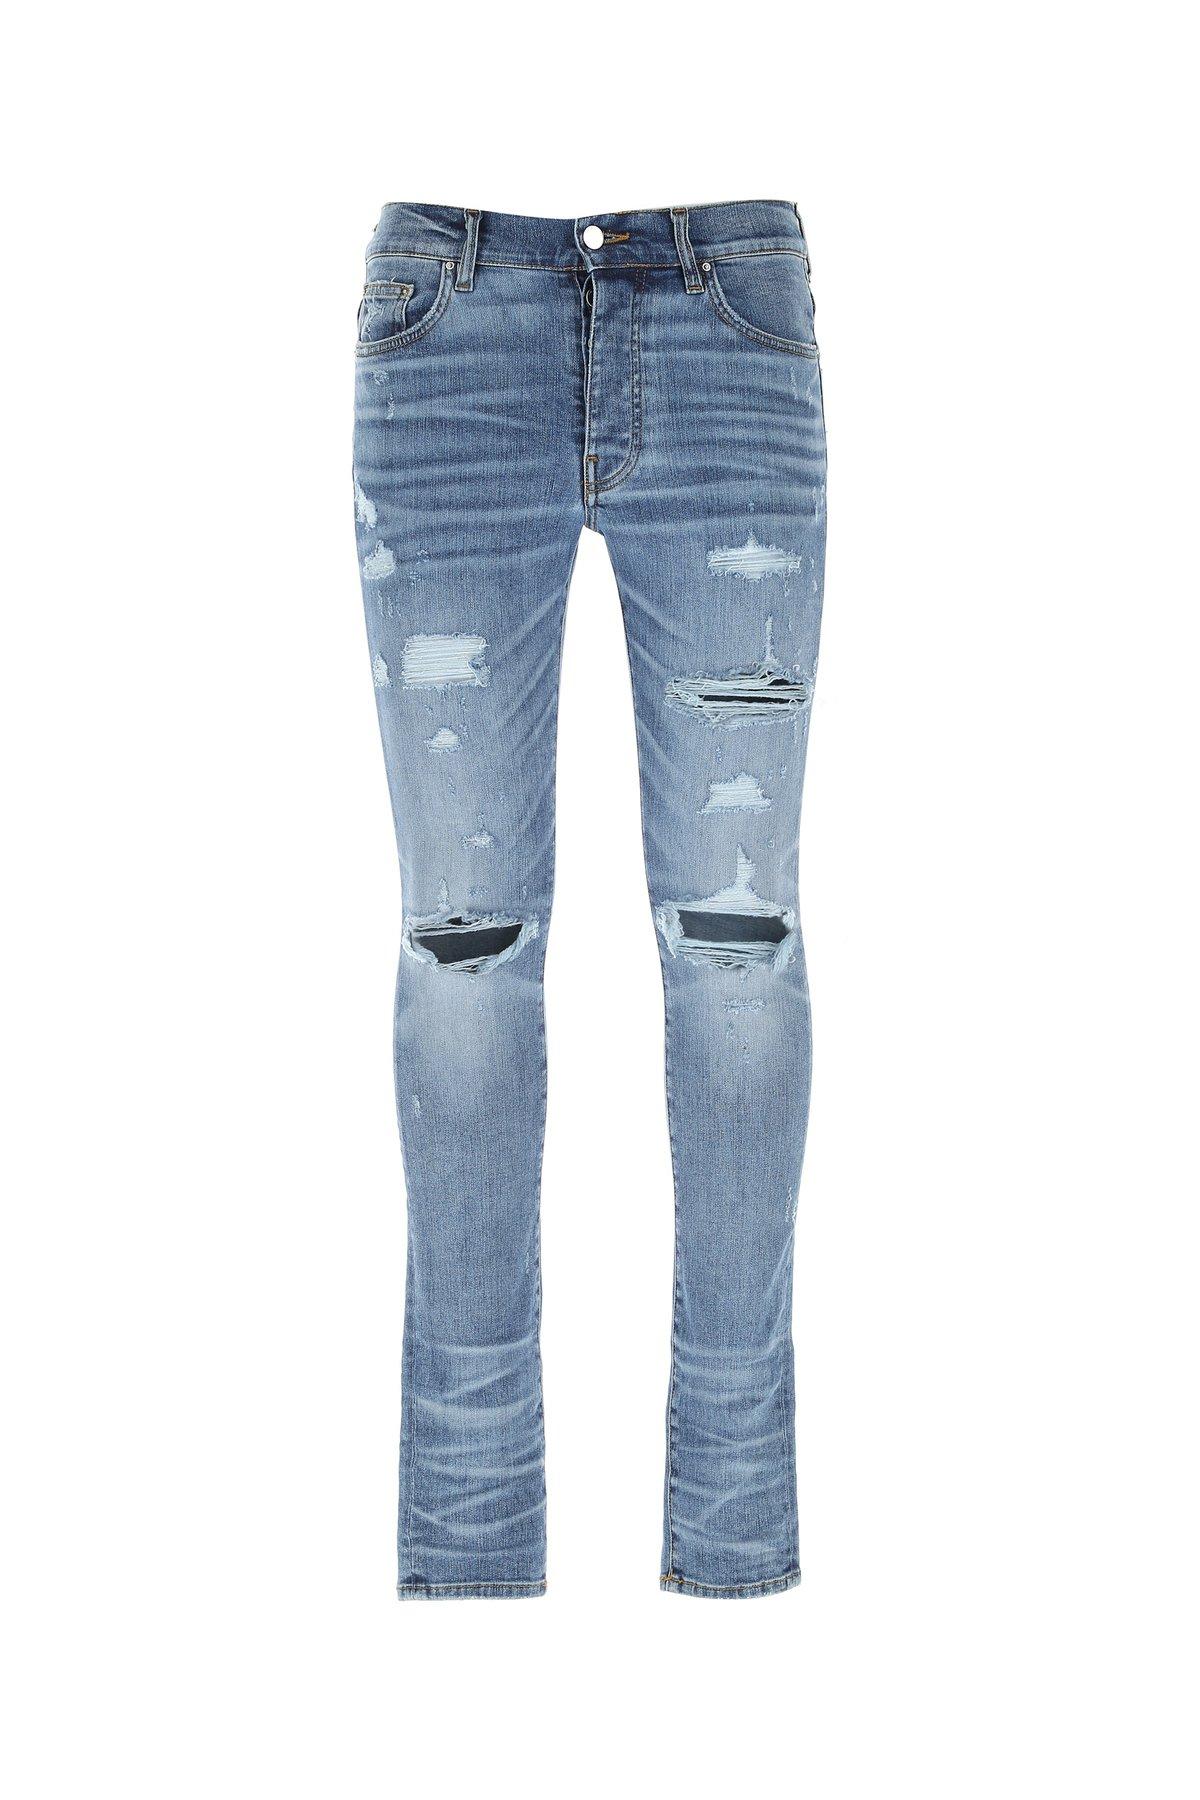 Amiri Denim Thrasher Plus' Distressed Skinny Jeans in Blue for Men 